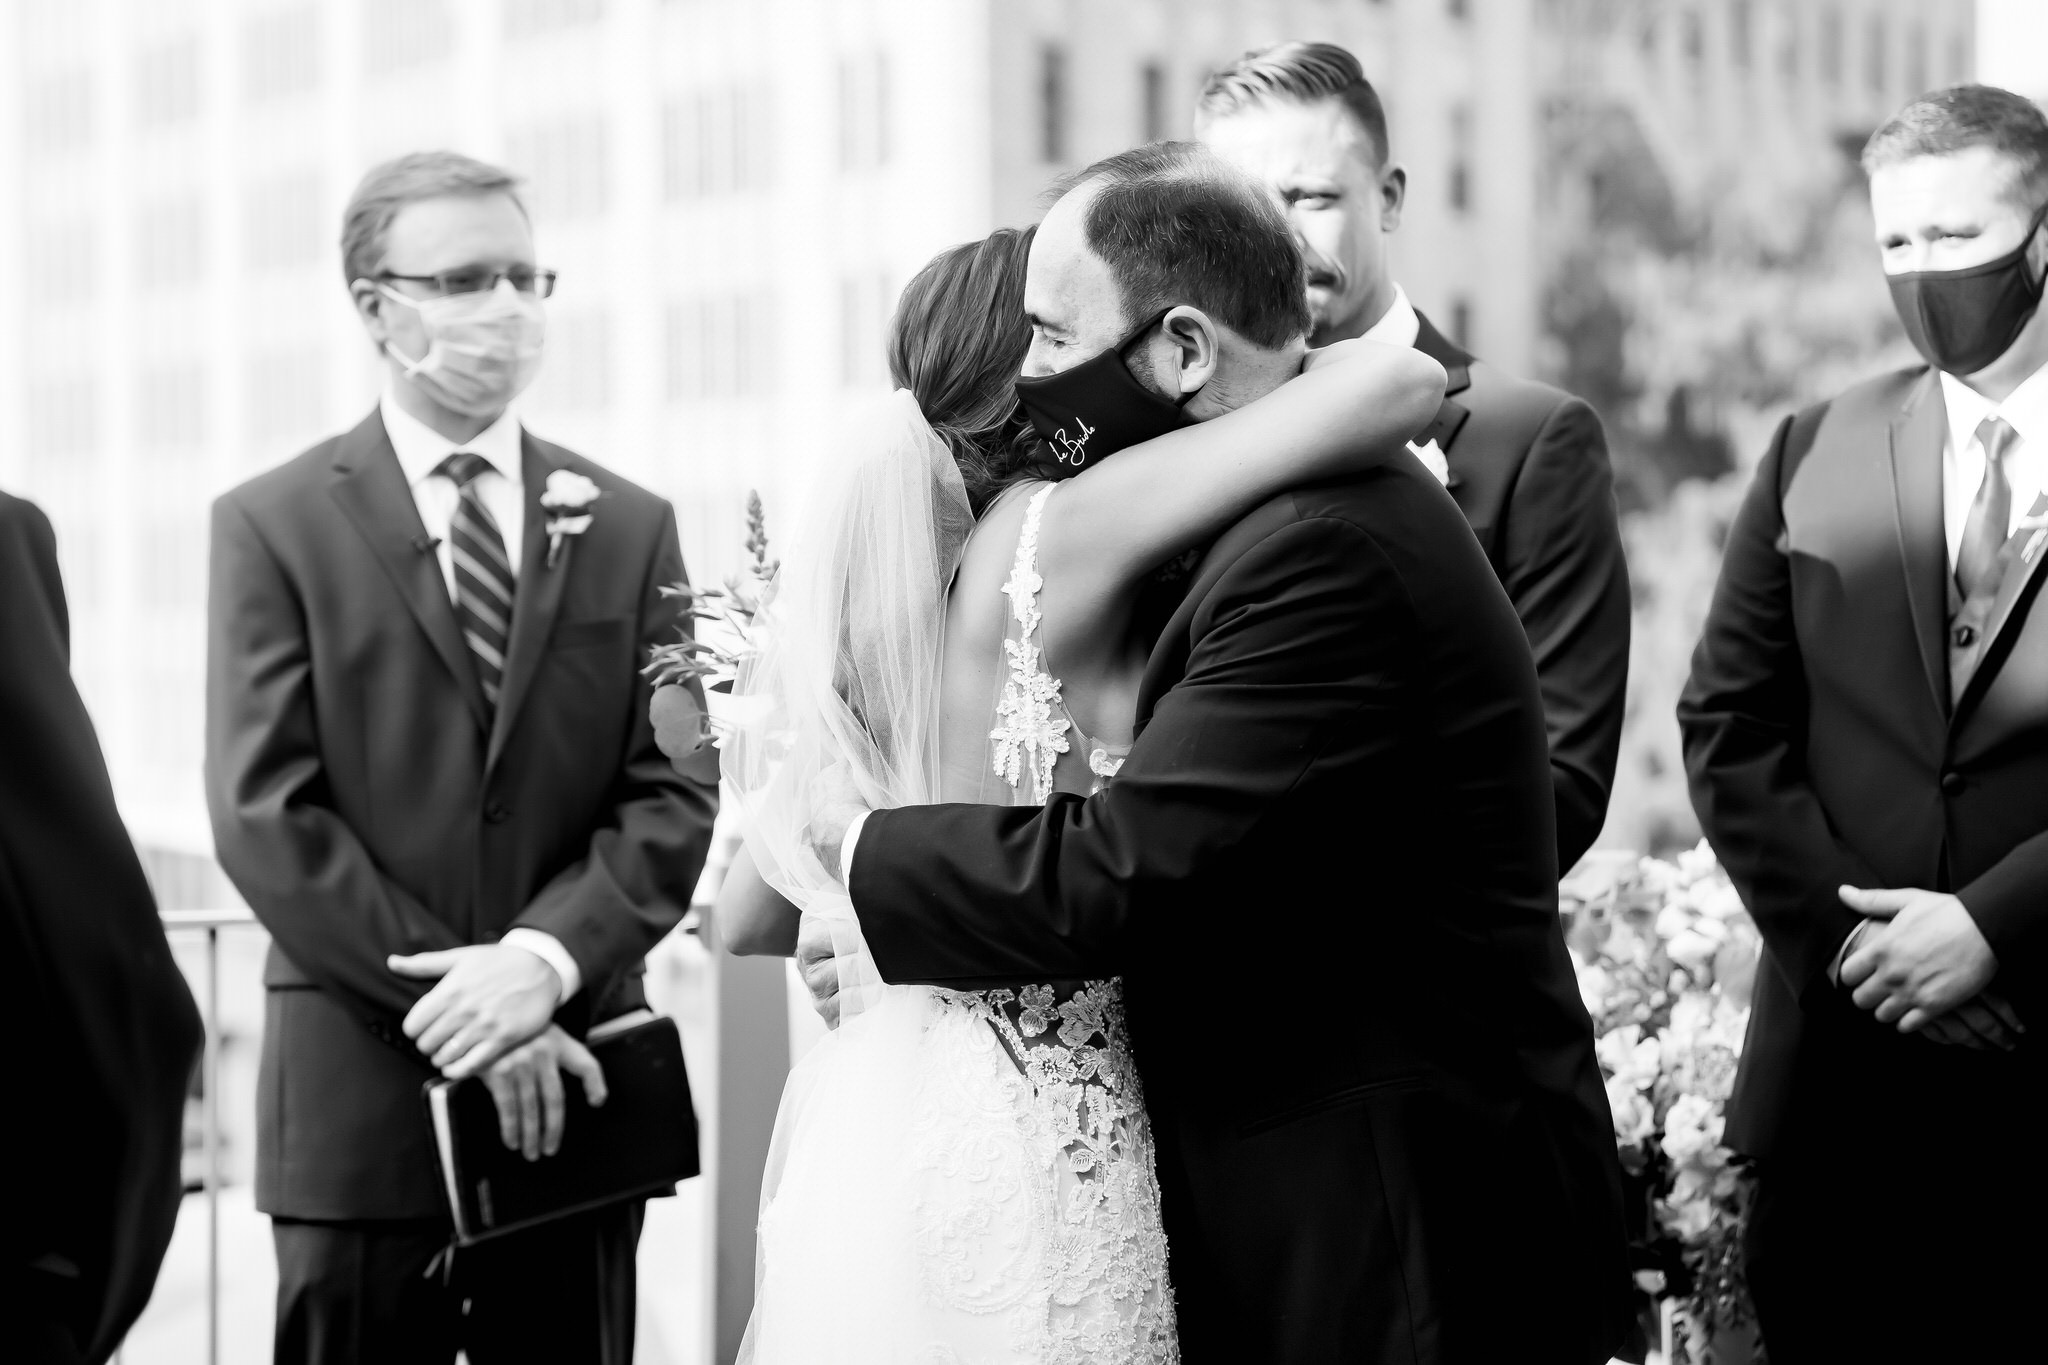 A Cream & Ivory Wedding at Rio Plaza in Downtown San Antonio, TX by Dawn Elizabeth Studios, San Antonio Wedding Photographer